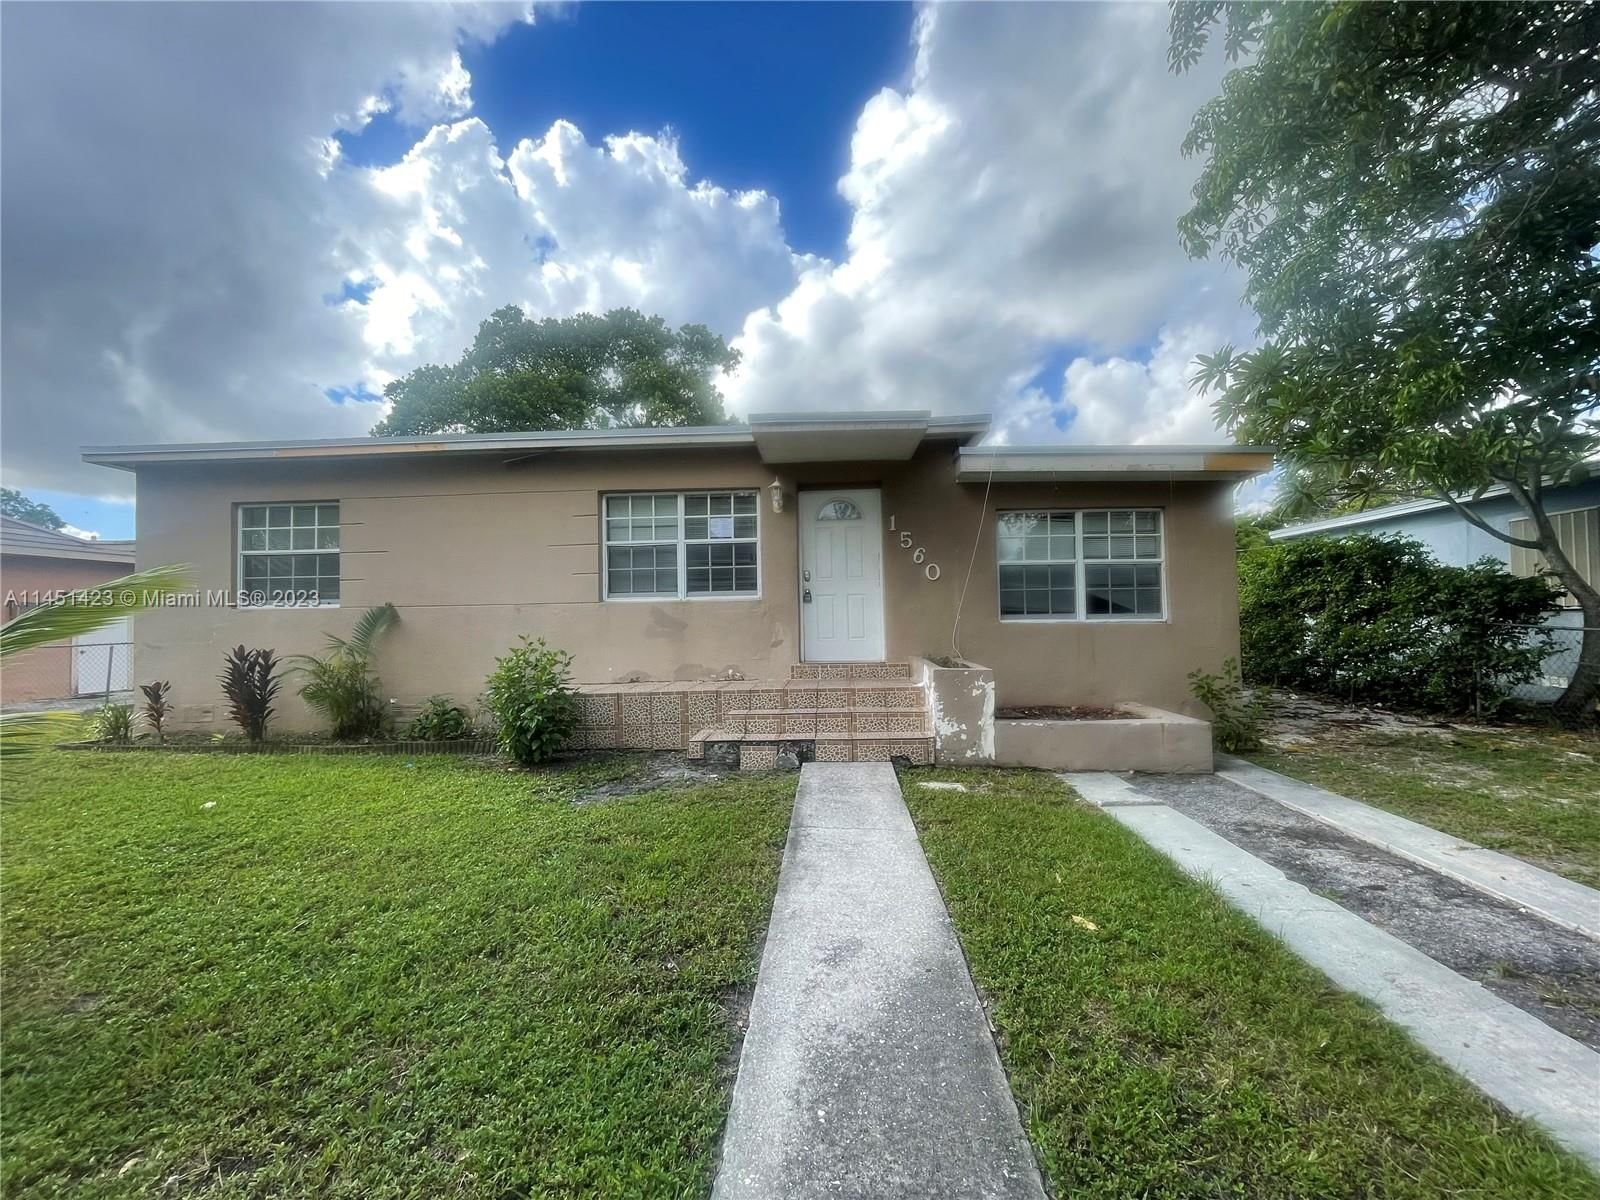 Real estate property located at 1560 124th St, Miami-Dade County, North Miami, FL